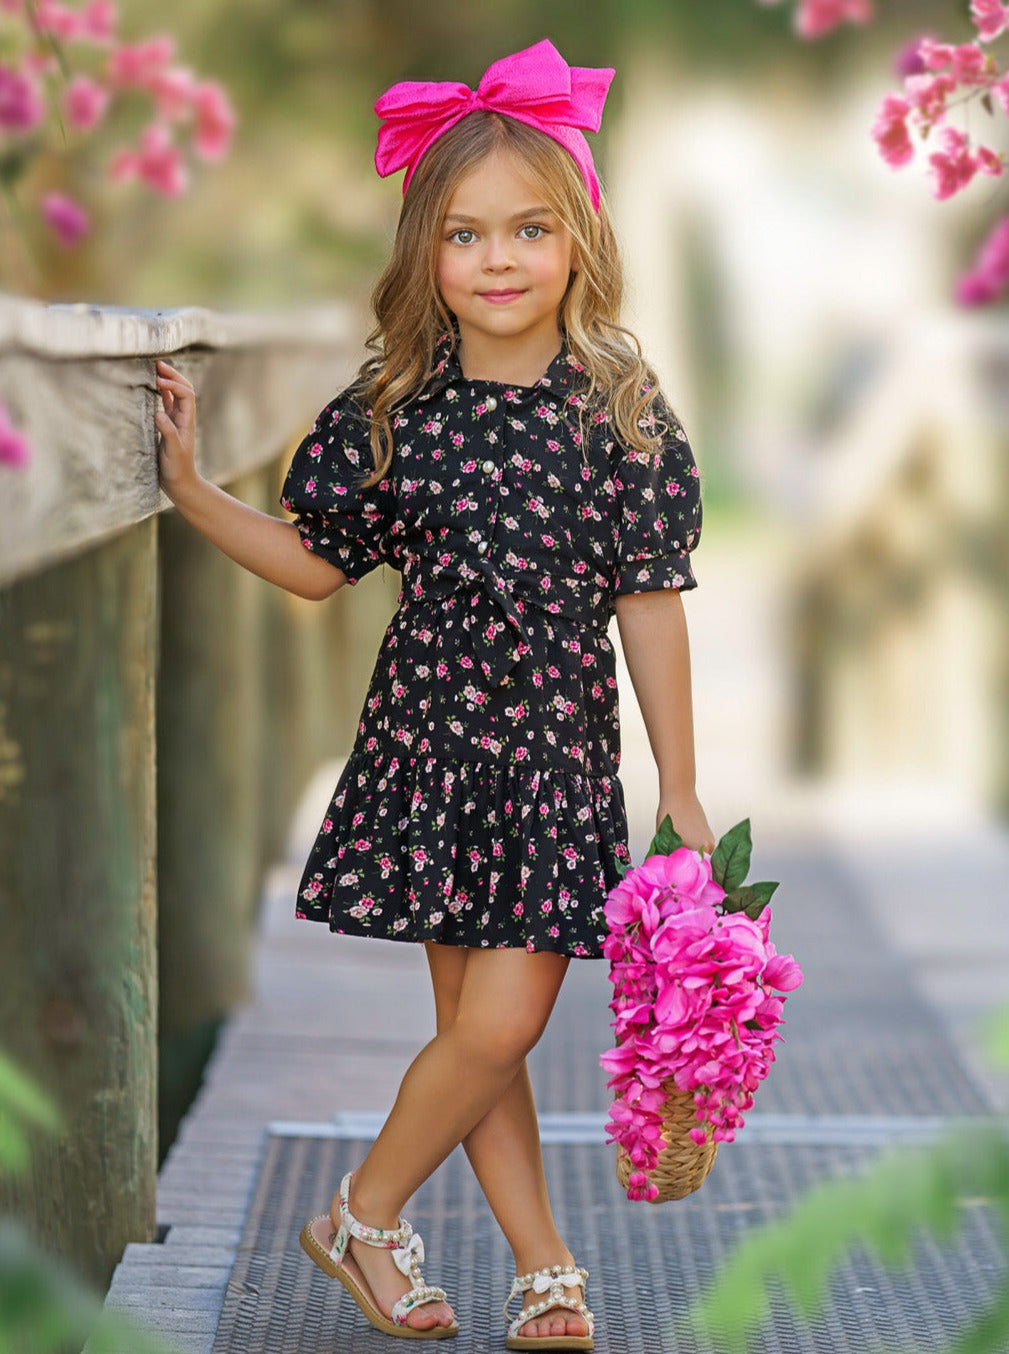 Toddler Spring Outfits | Girls Rosy Knot Hem Top & Ruffle Skirt Set 